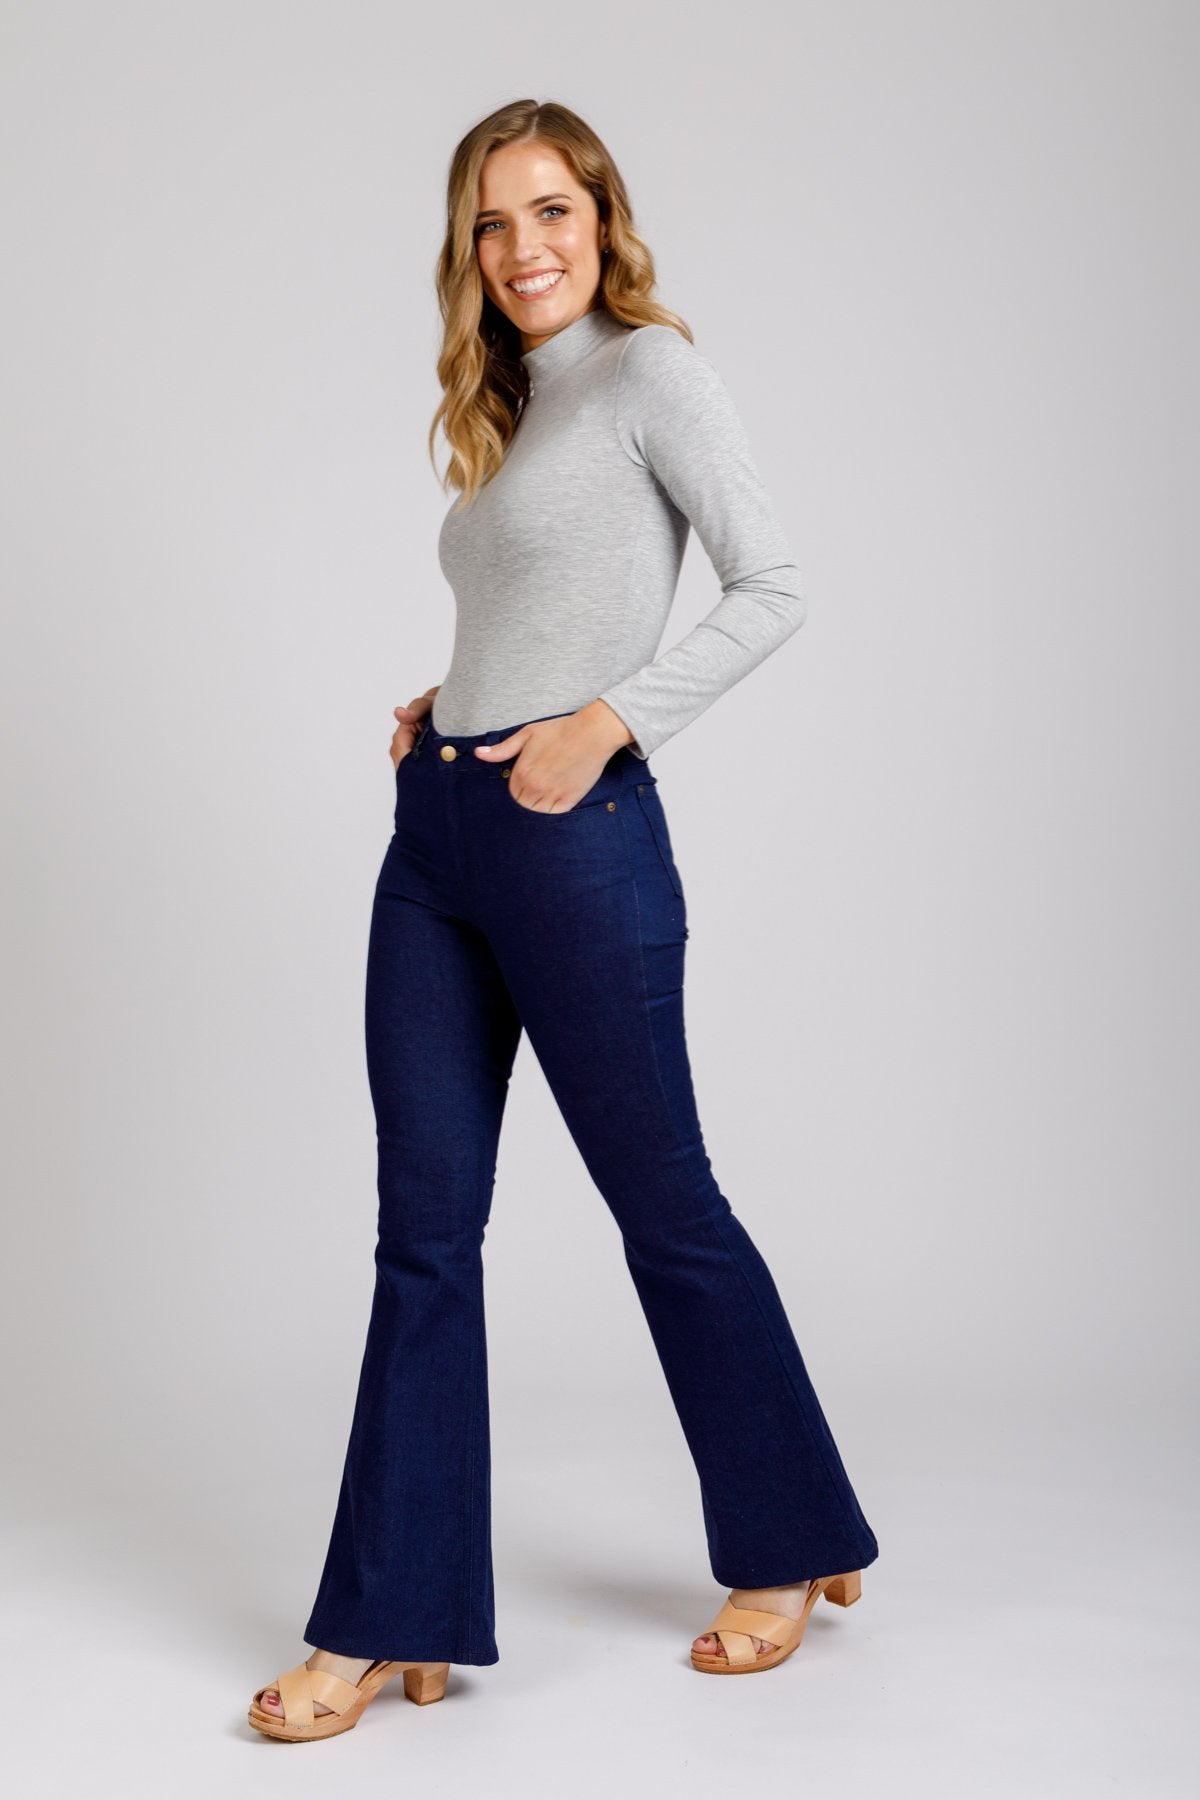 Megan Nielsen Ash Jeans (4 in 1!)